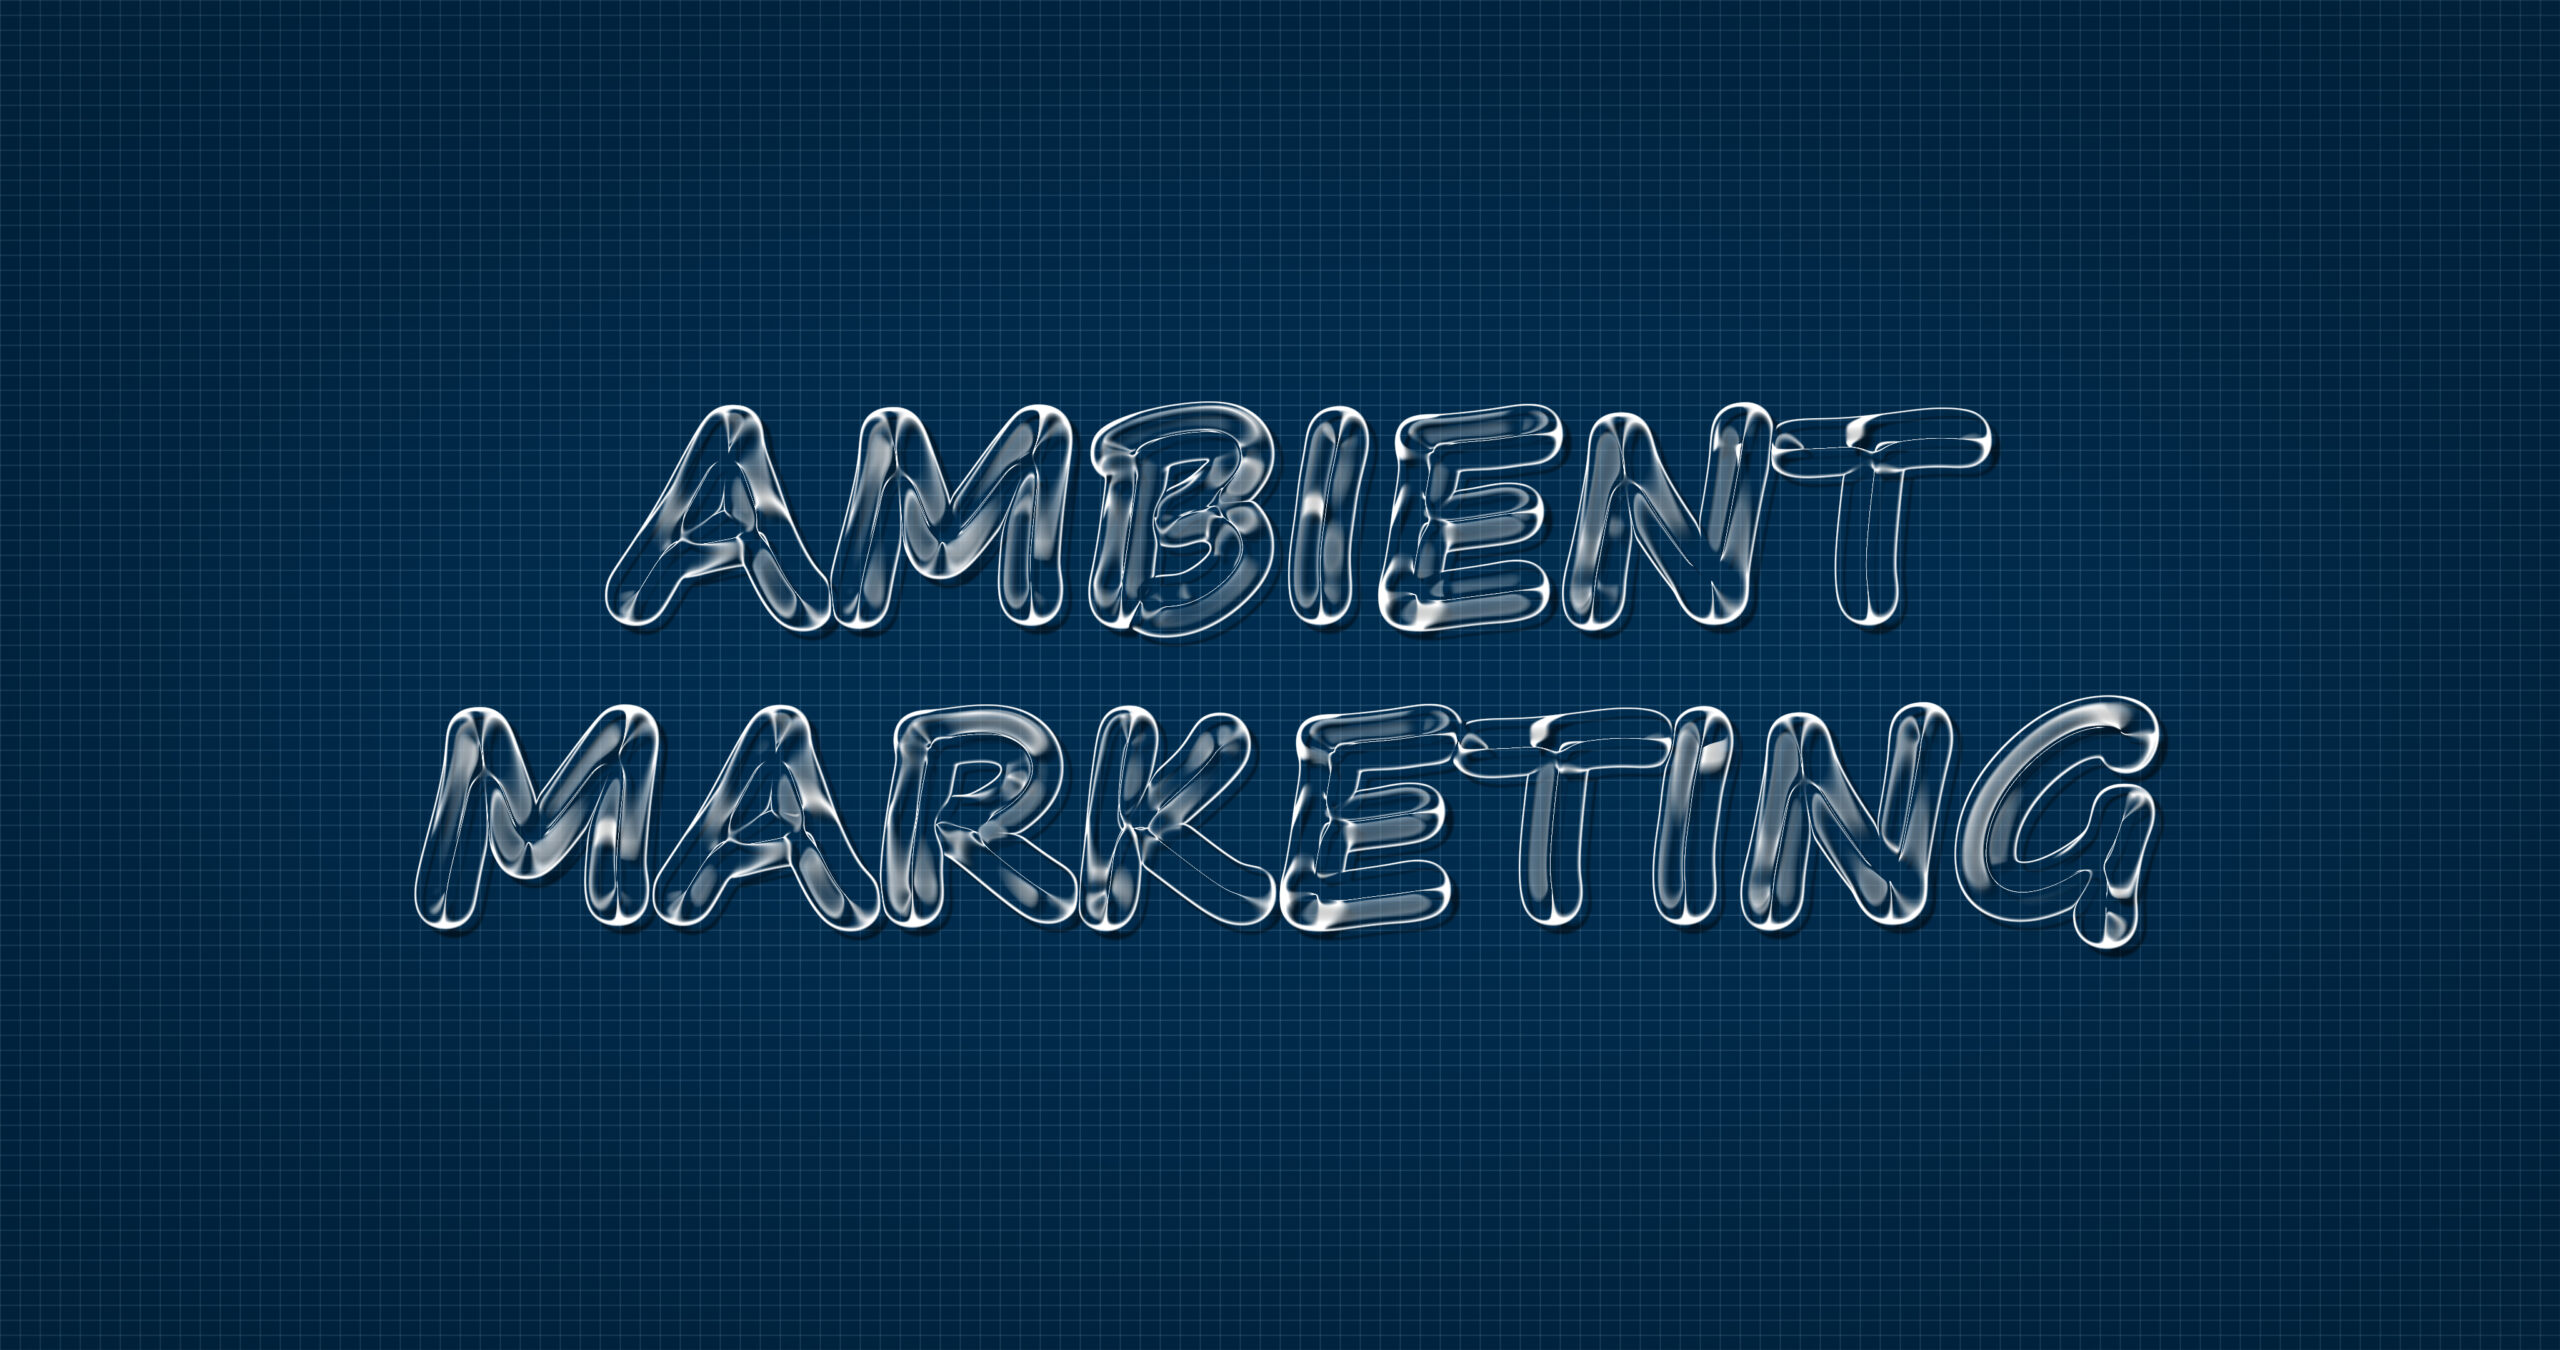 Ambient Marketing Creates Lasting Impression